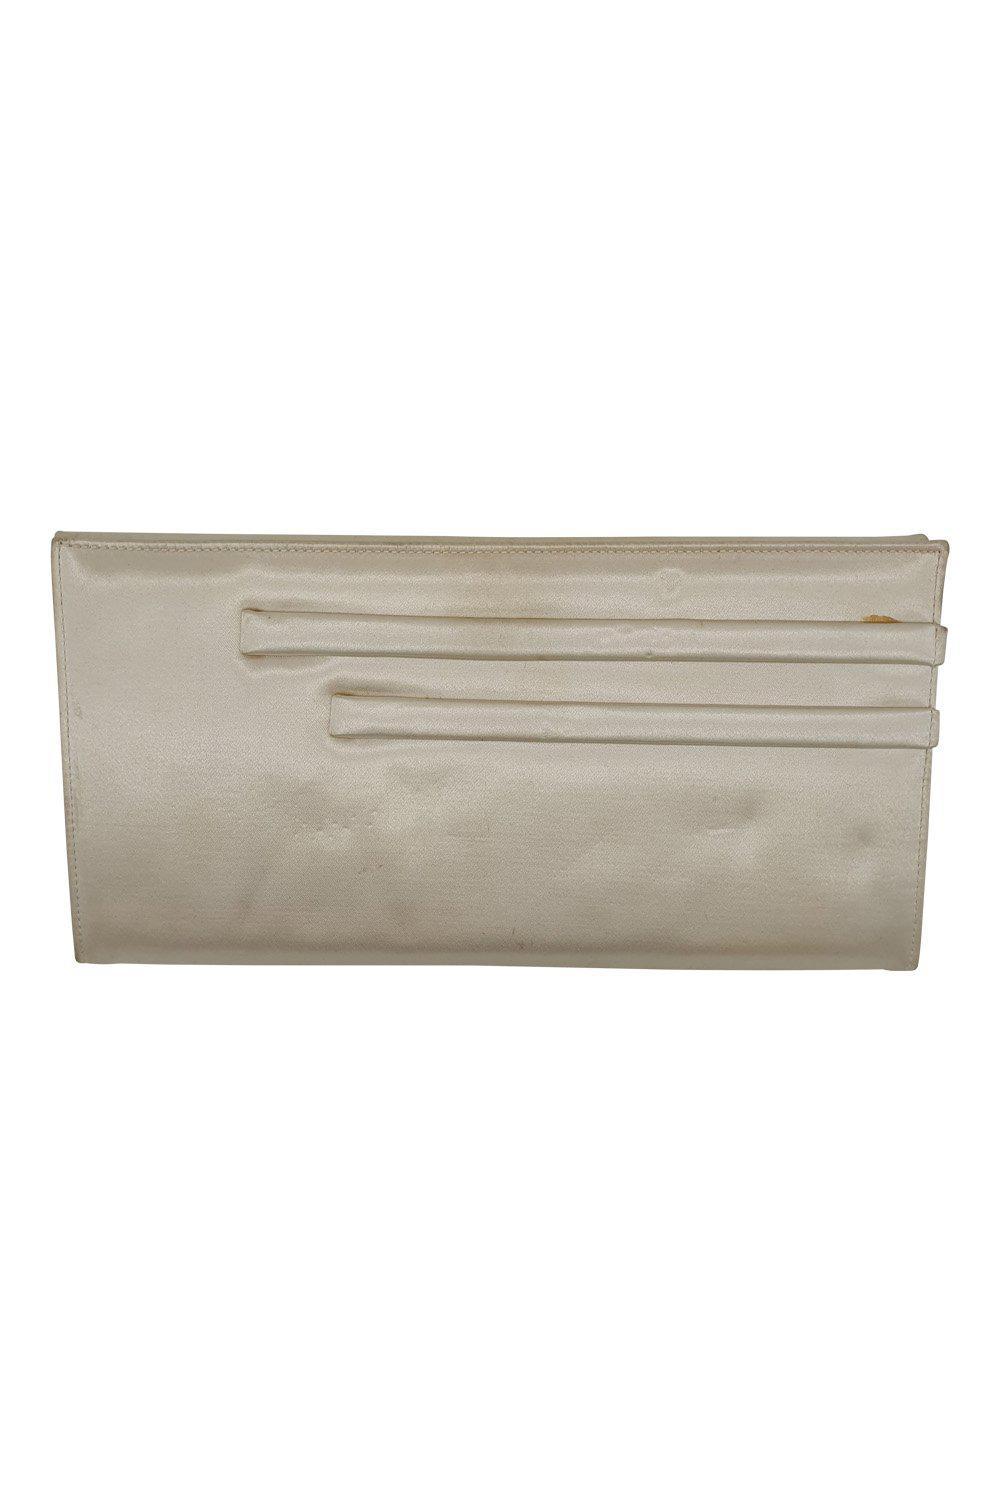 UNLABELLED Vintage cream clutch purse bag (M)-Unlabelled-The Freperie